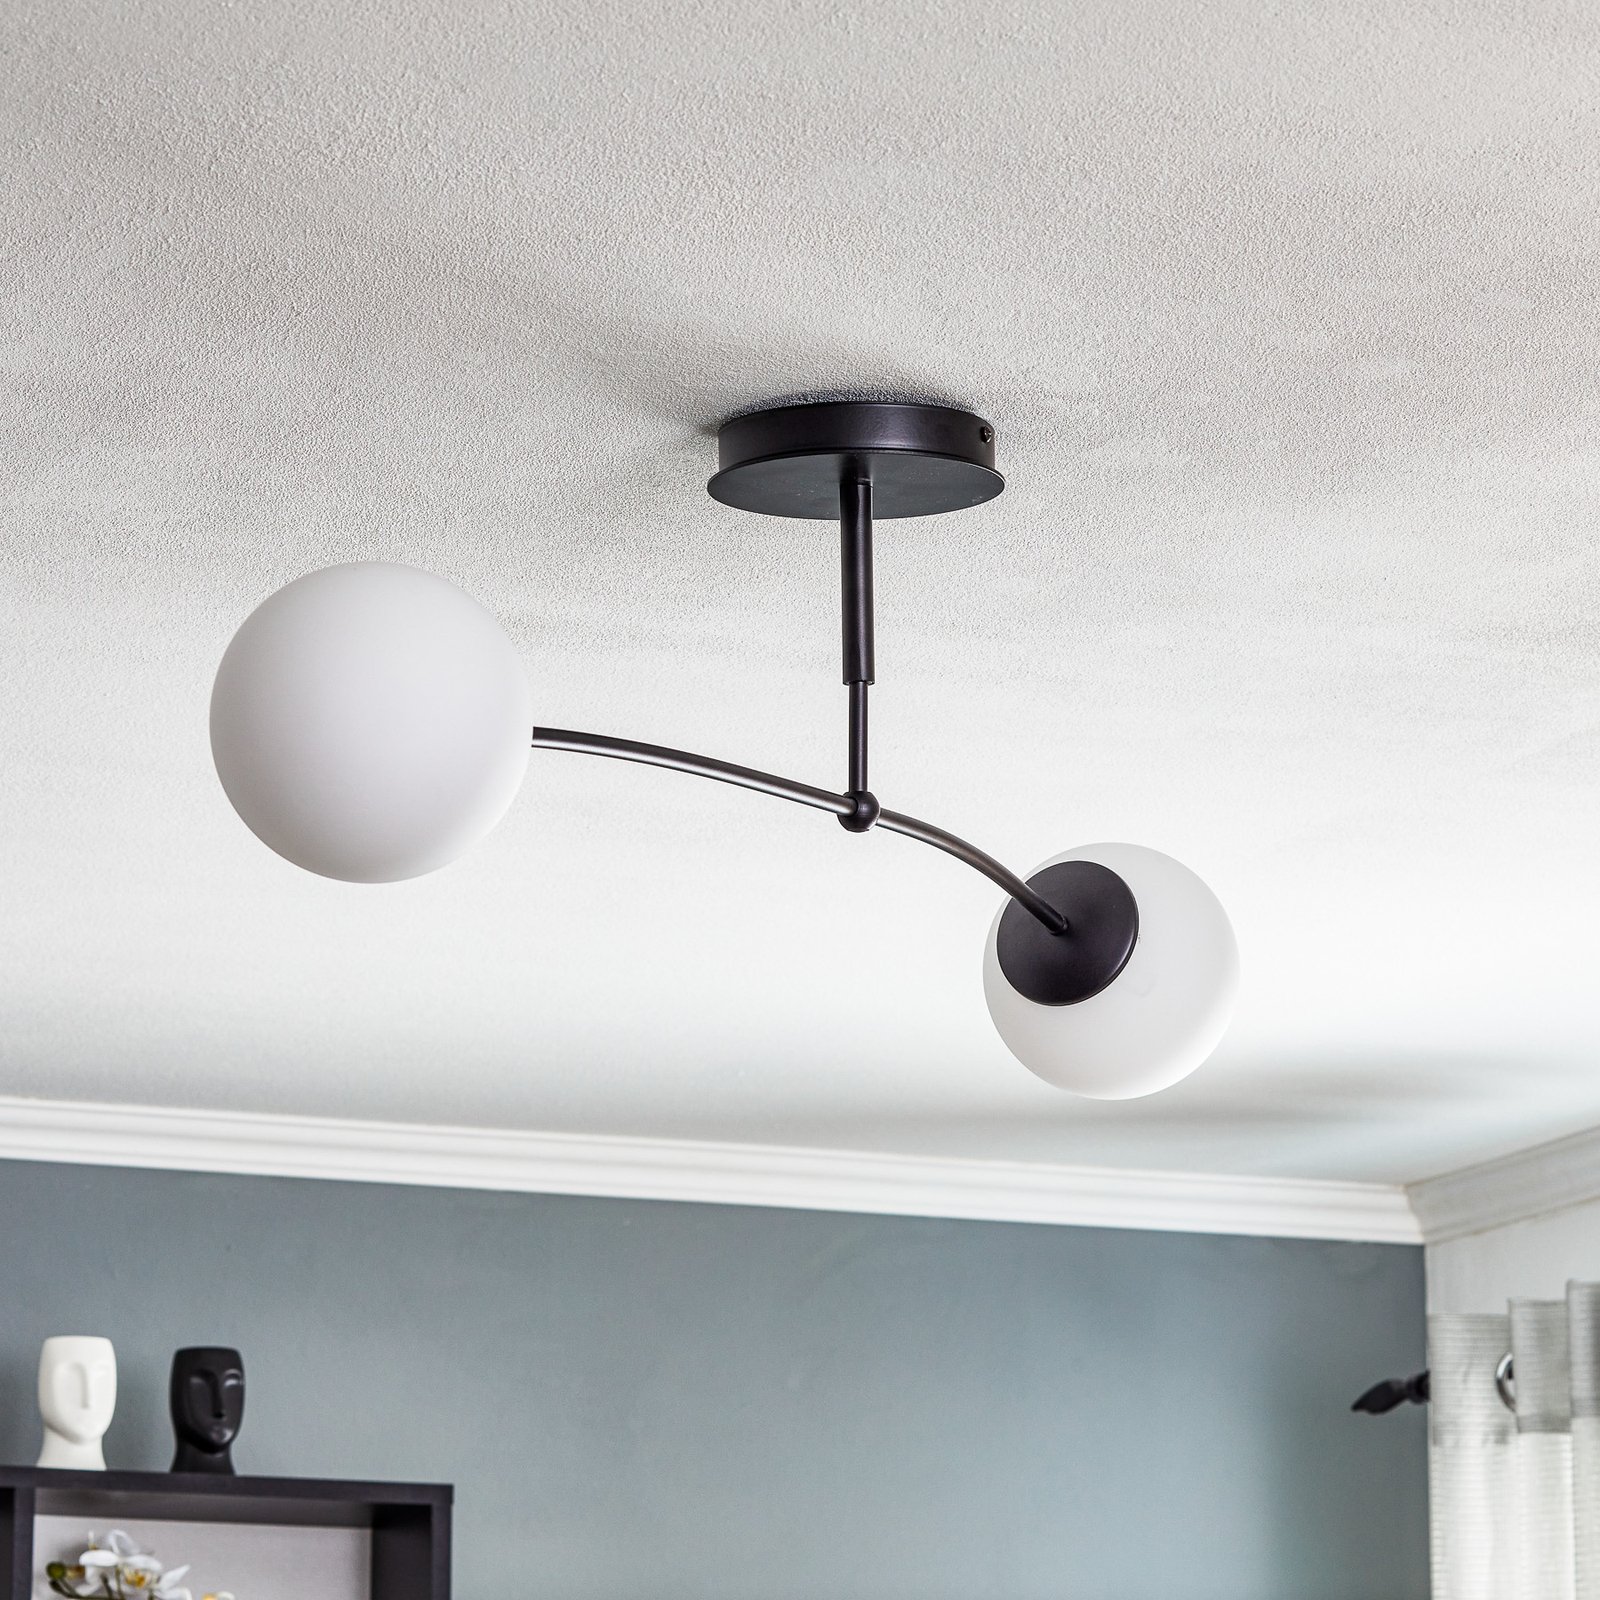 Pregos 2 ceiling light, two-bulb, black